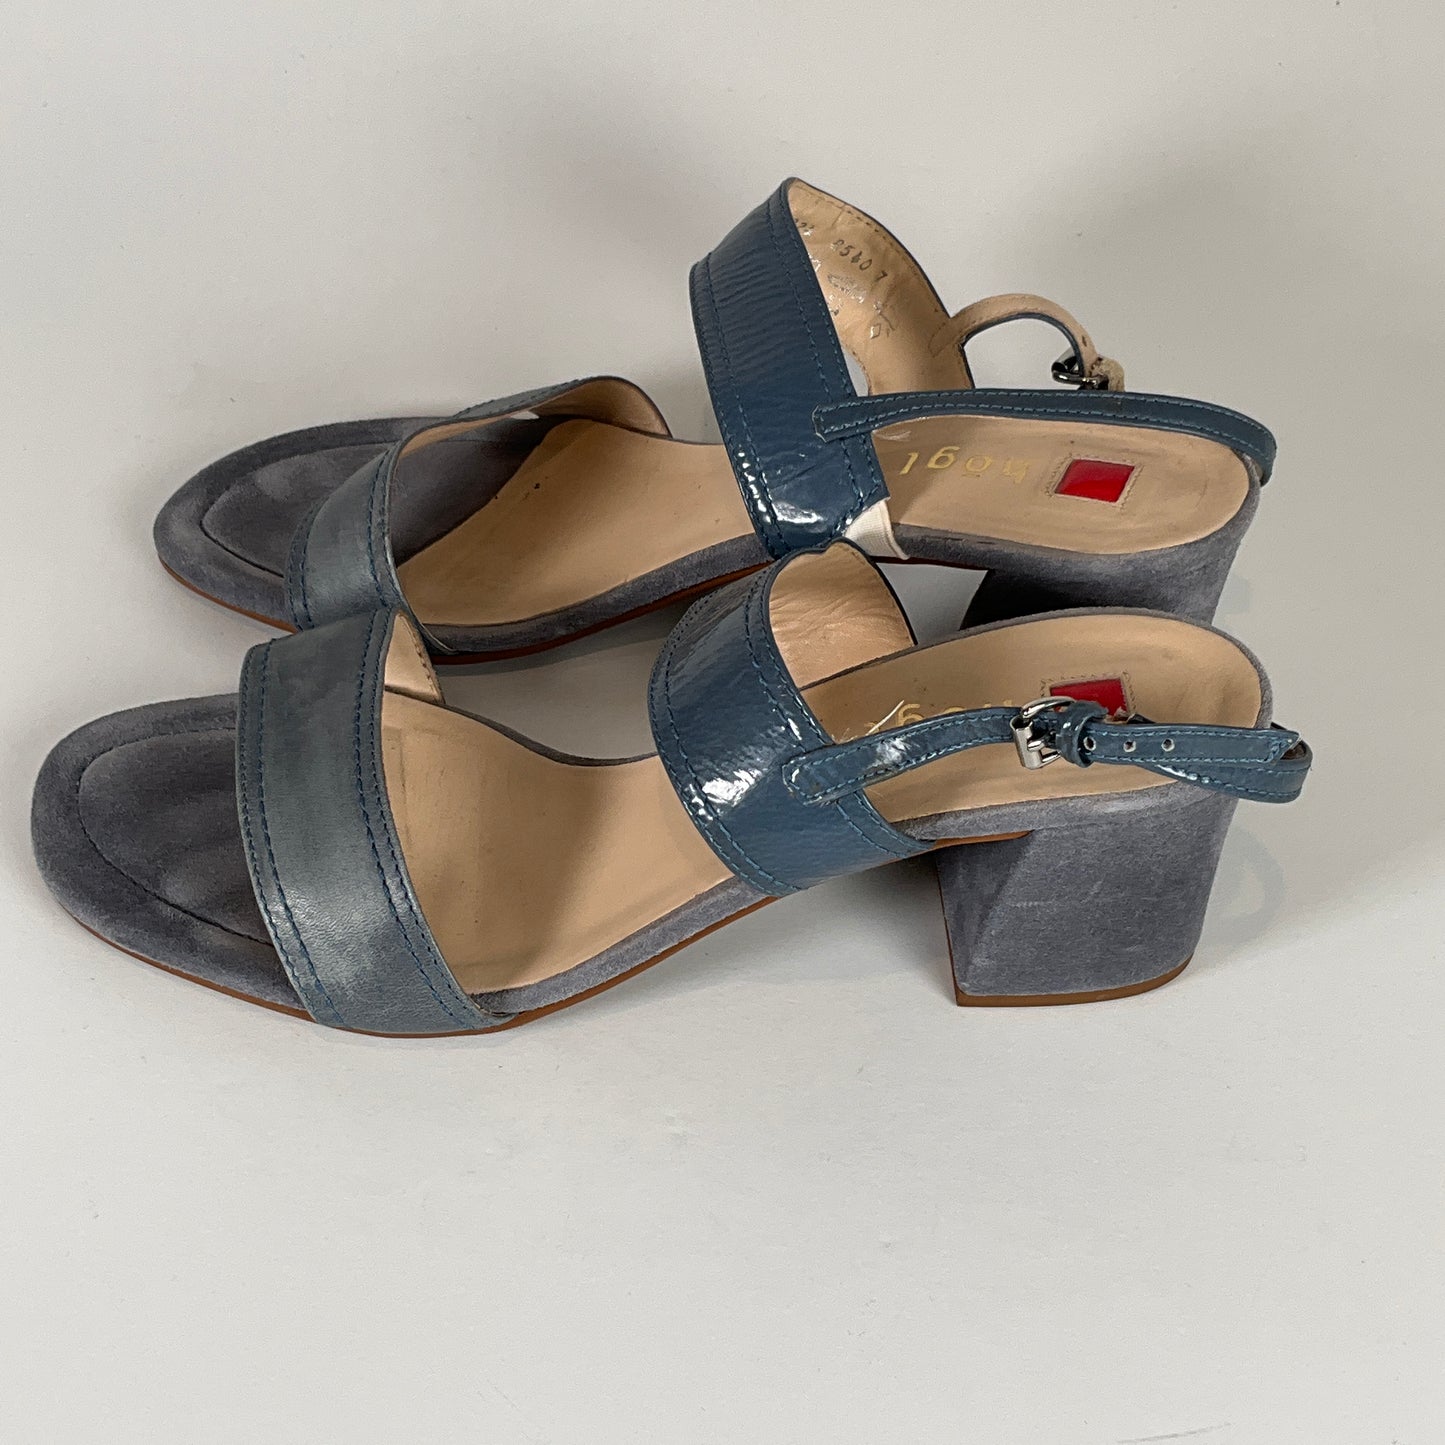 Hogl - Grey Shoes - Size 6